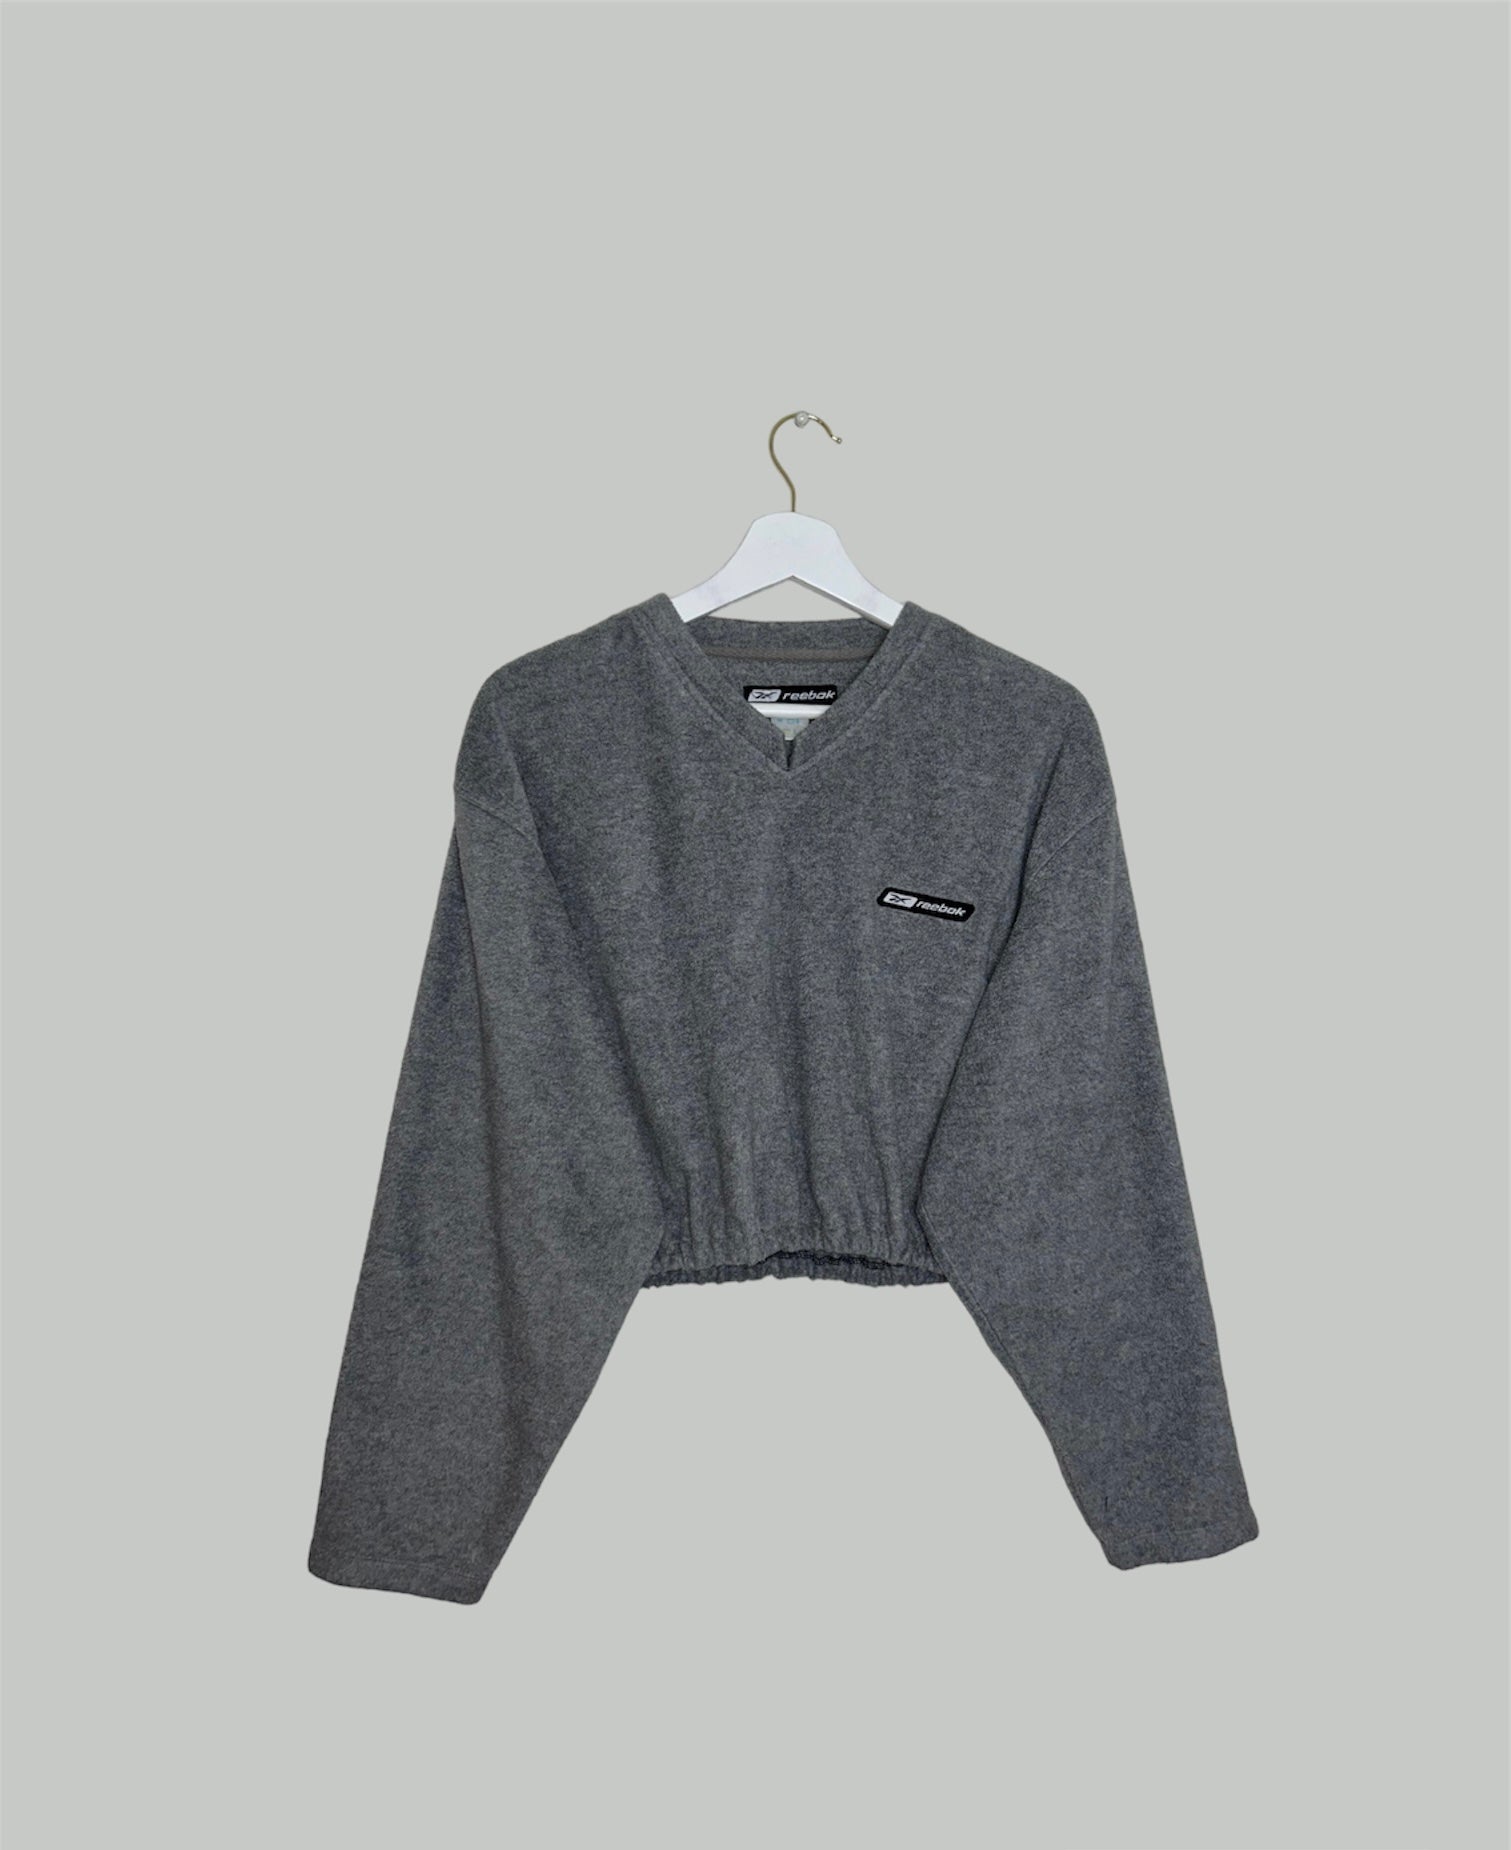 grey cropped sweatshirt with reebok logo